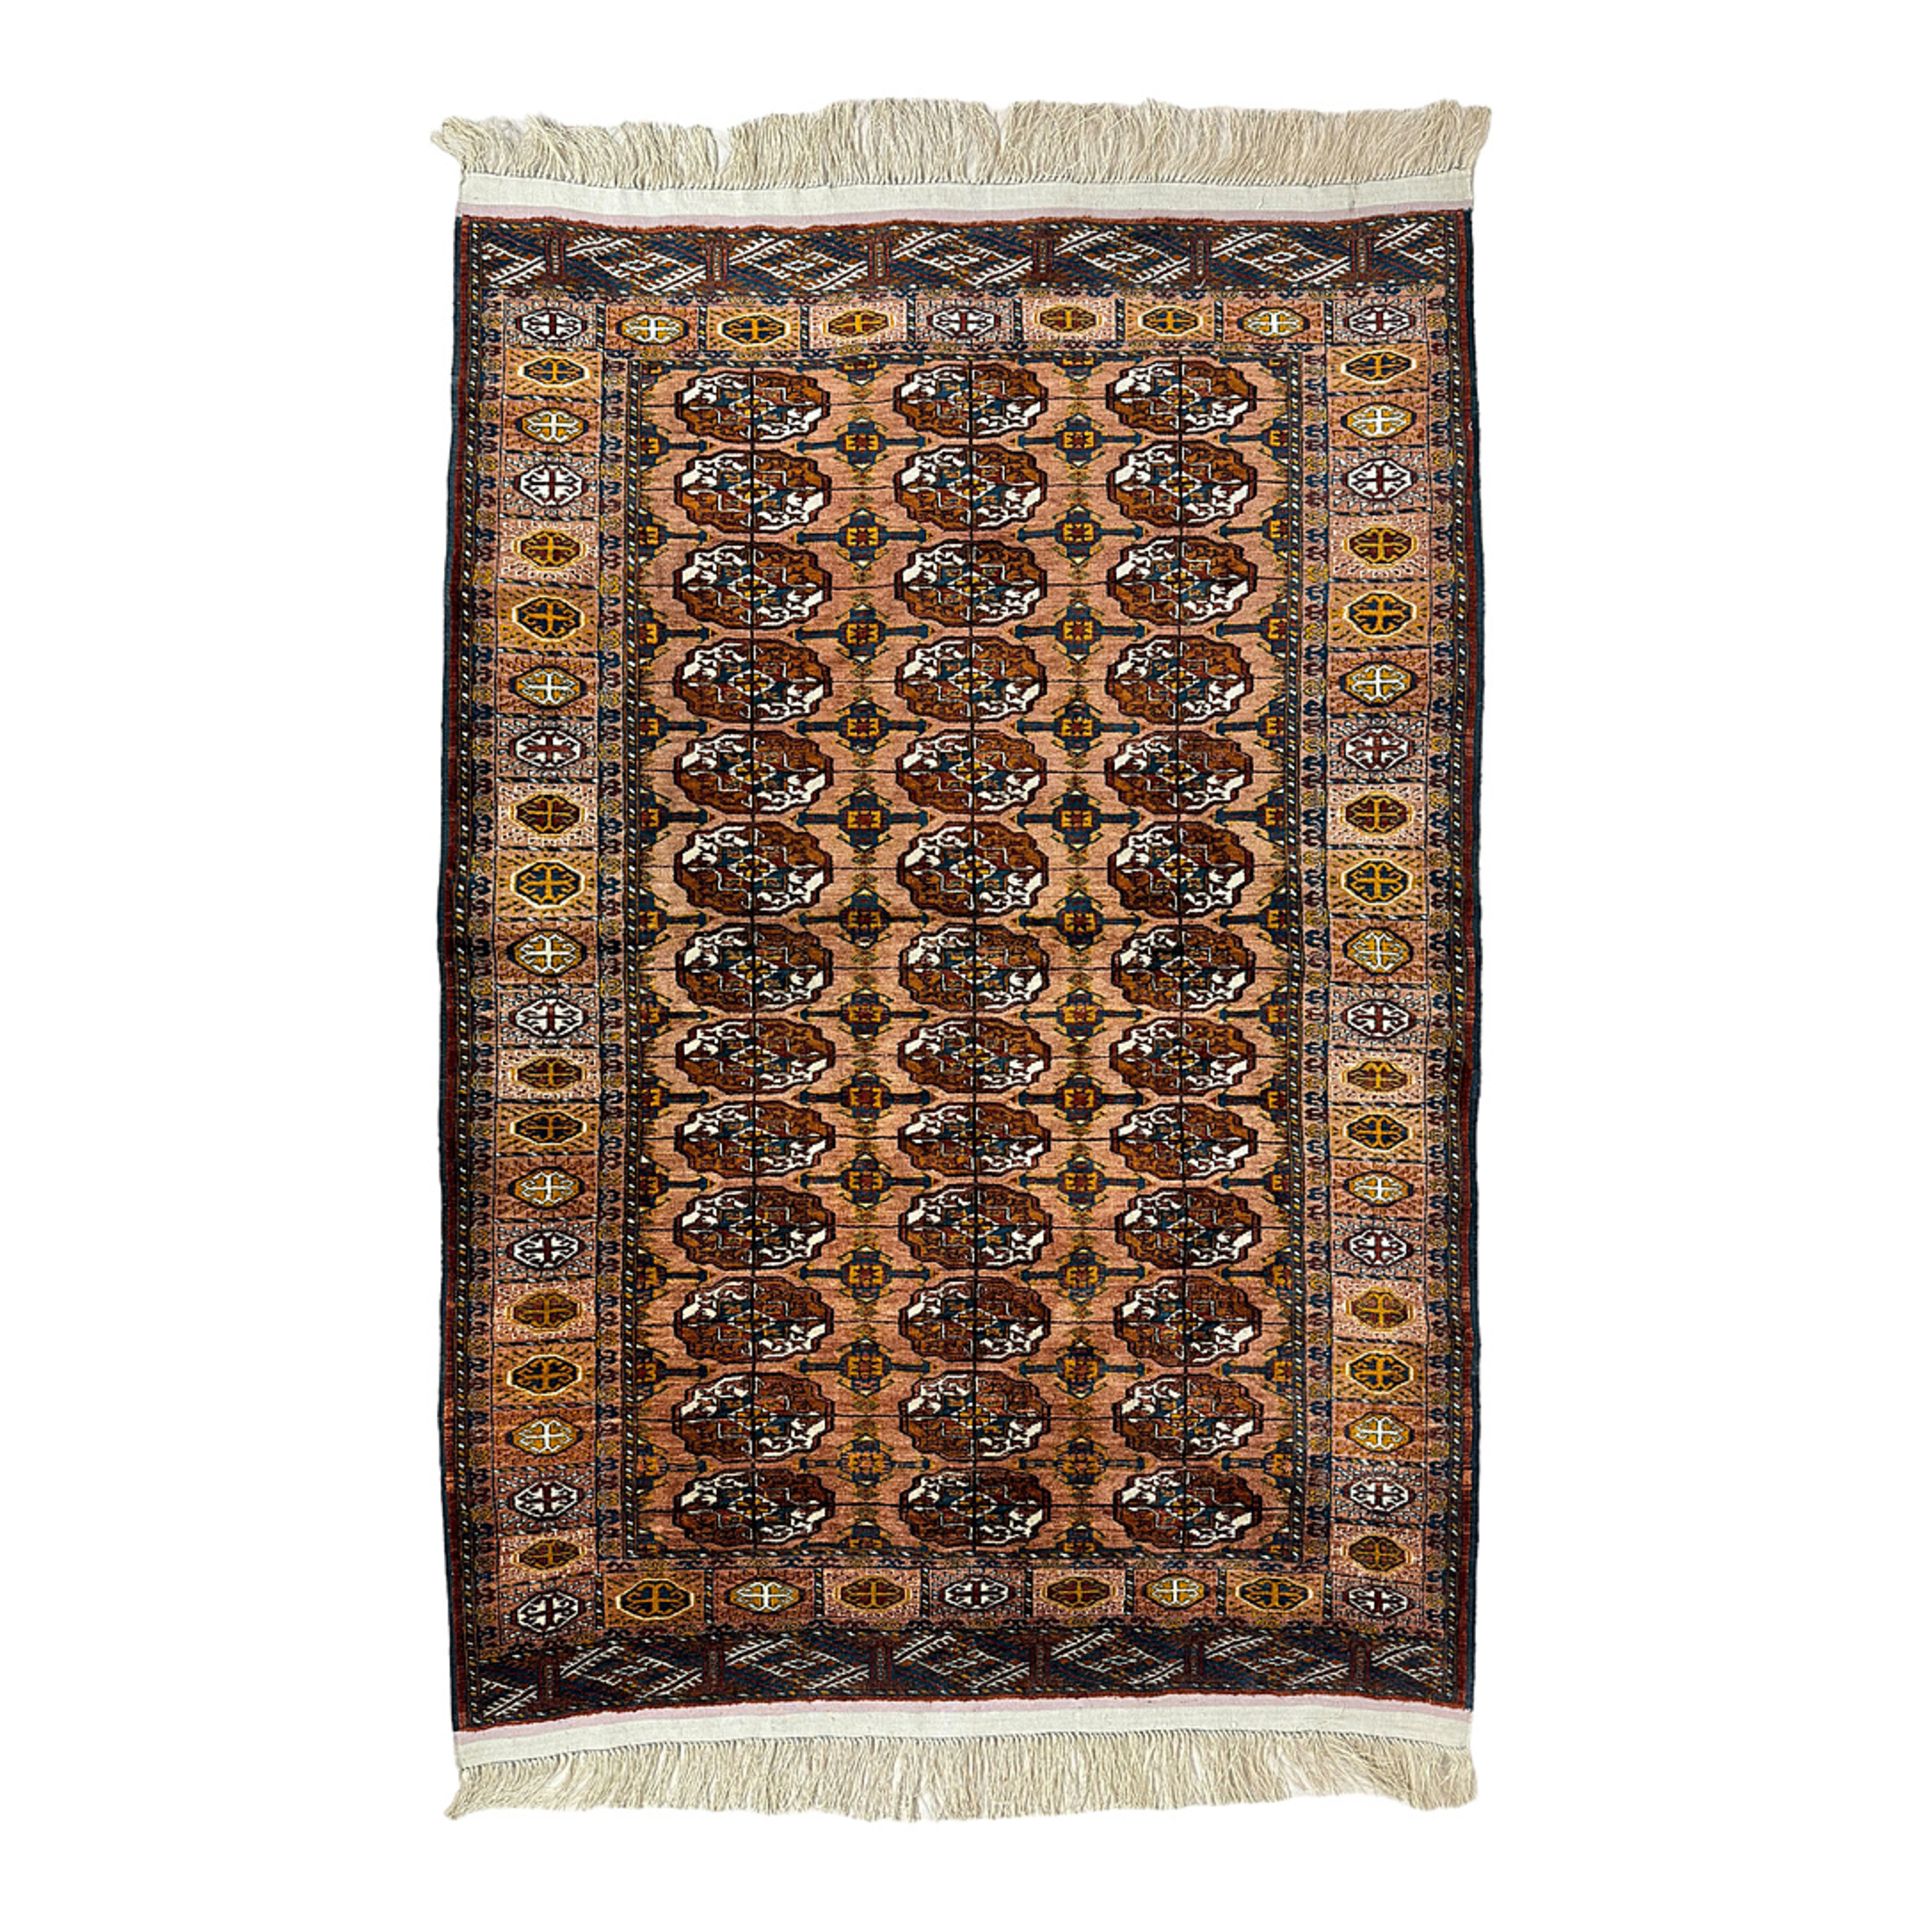 Carpet, Pakistan, 20th century